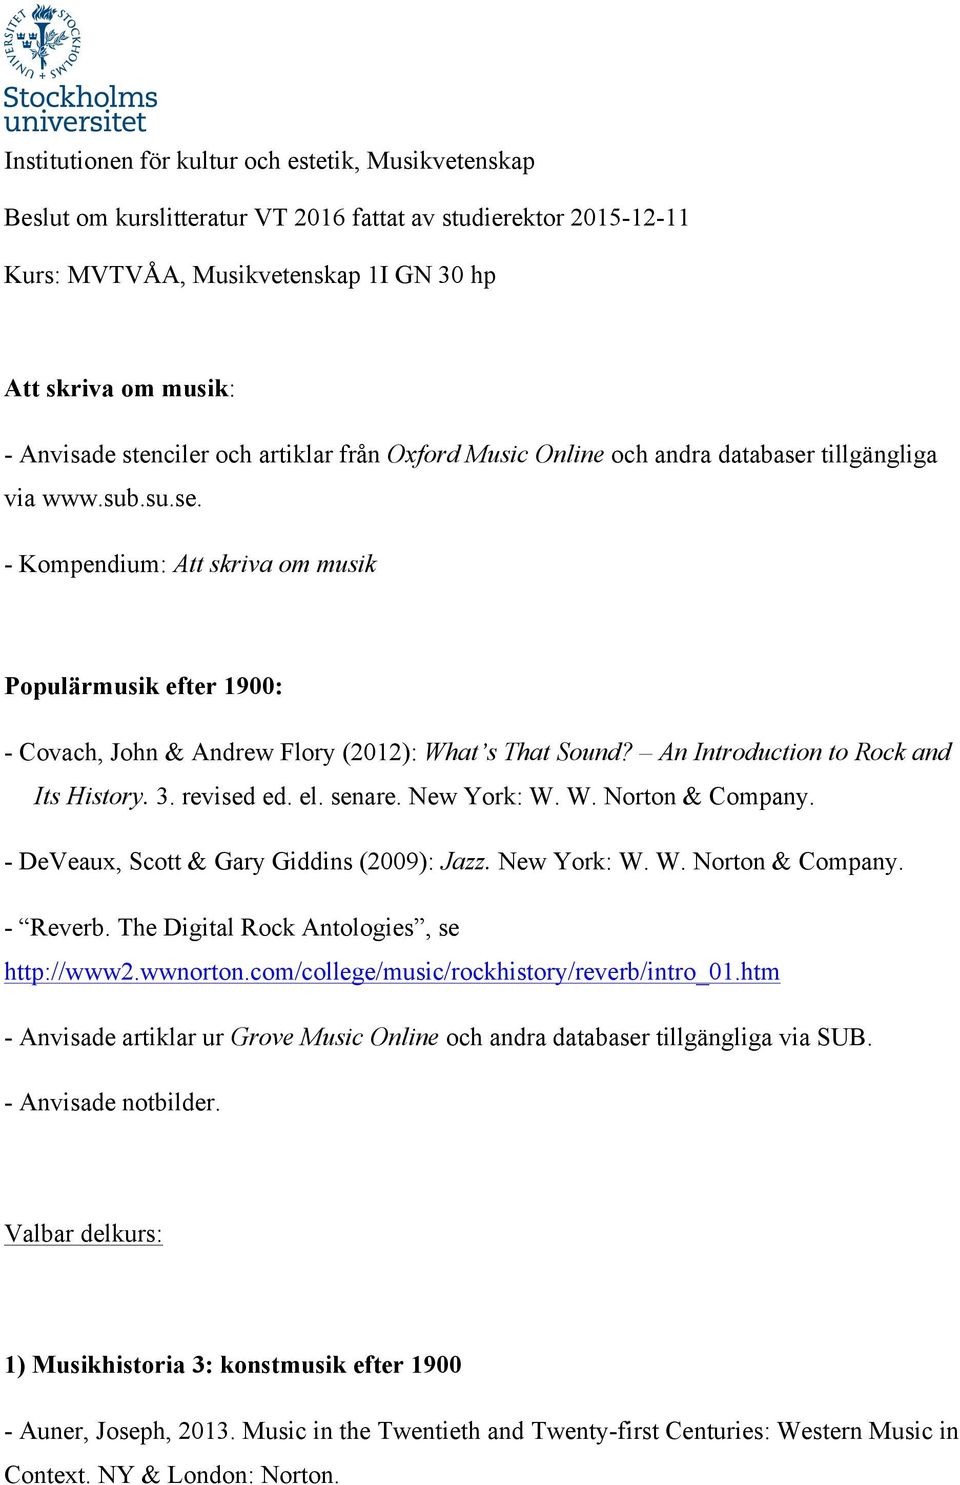 An Introduction to Rock and Its History. 3. revised ed. el. senare. New York: W. W. Norton & Company. - DeVeaux, Scott & Gary Giddins (2009): Jazz. New York: W. W. Norton & Company. - Reverb.